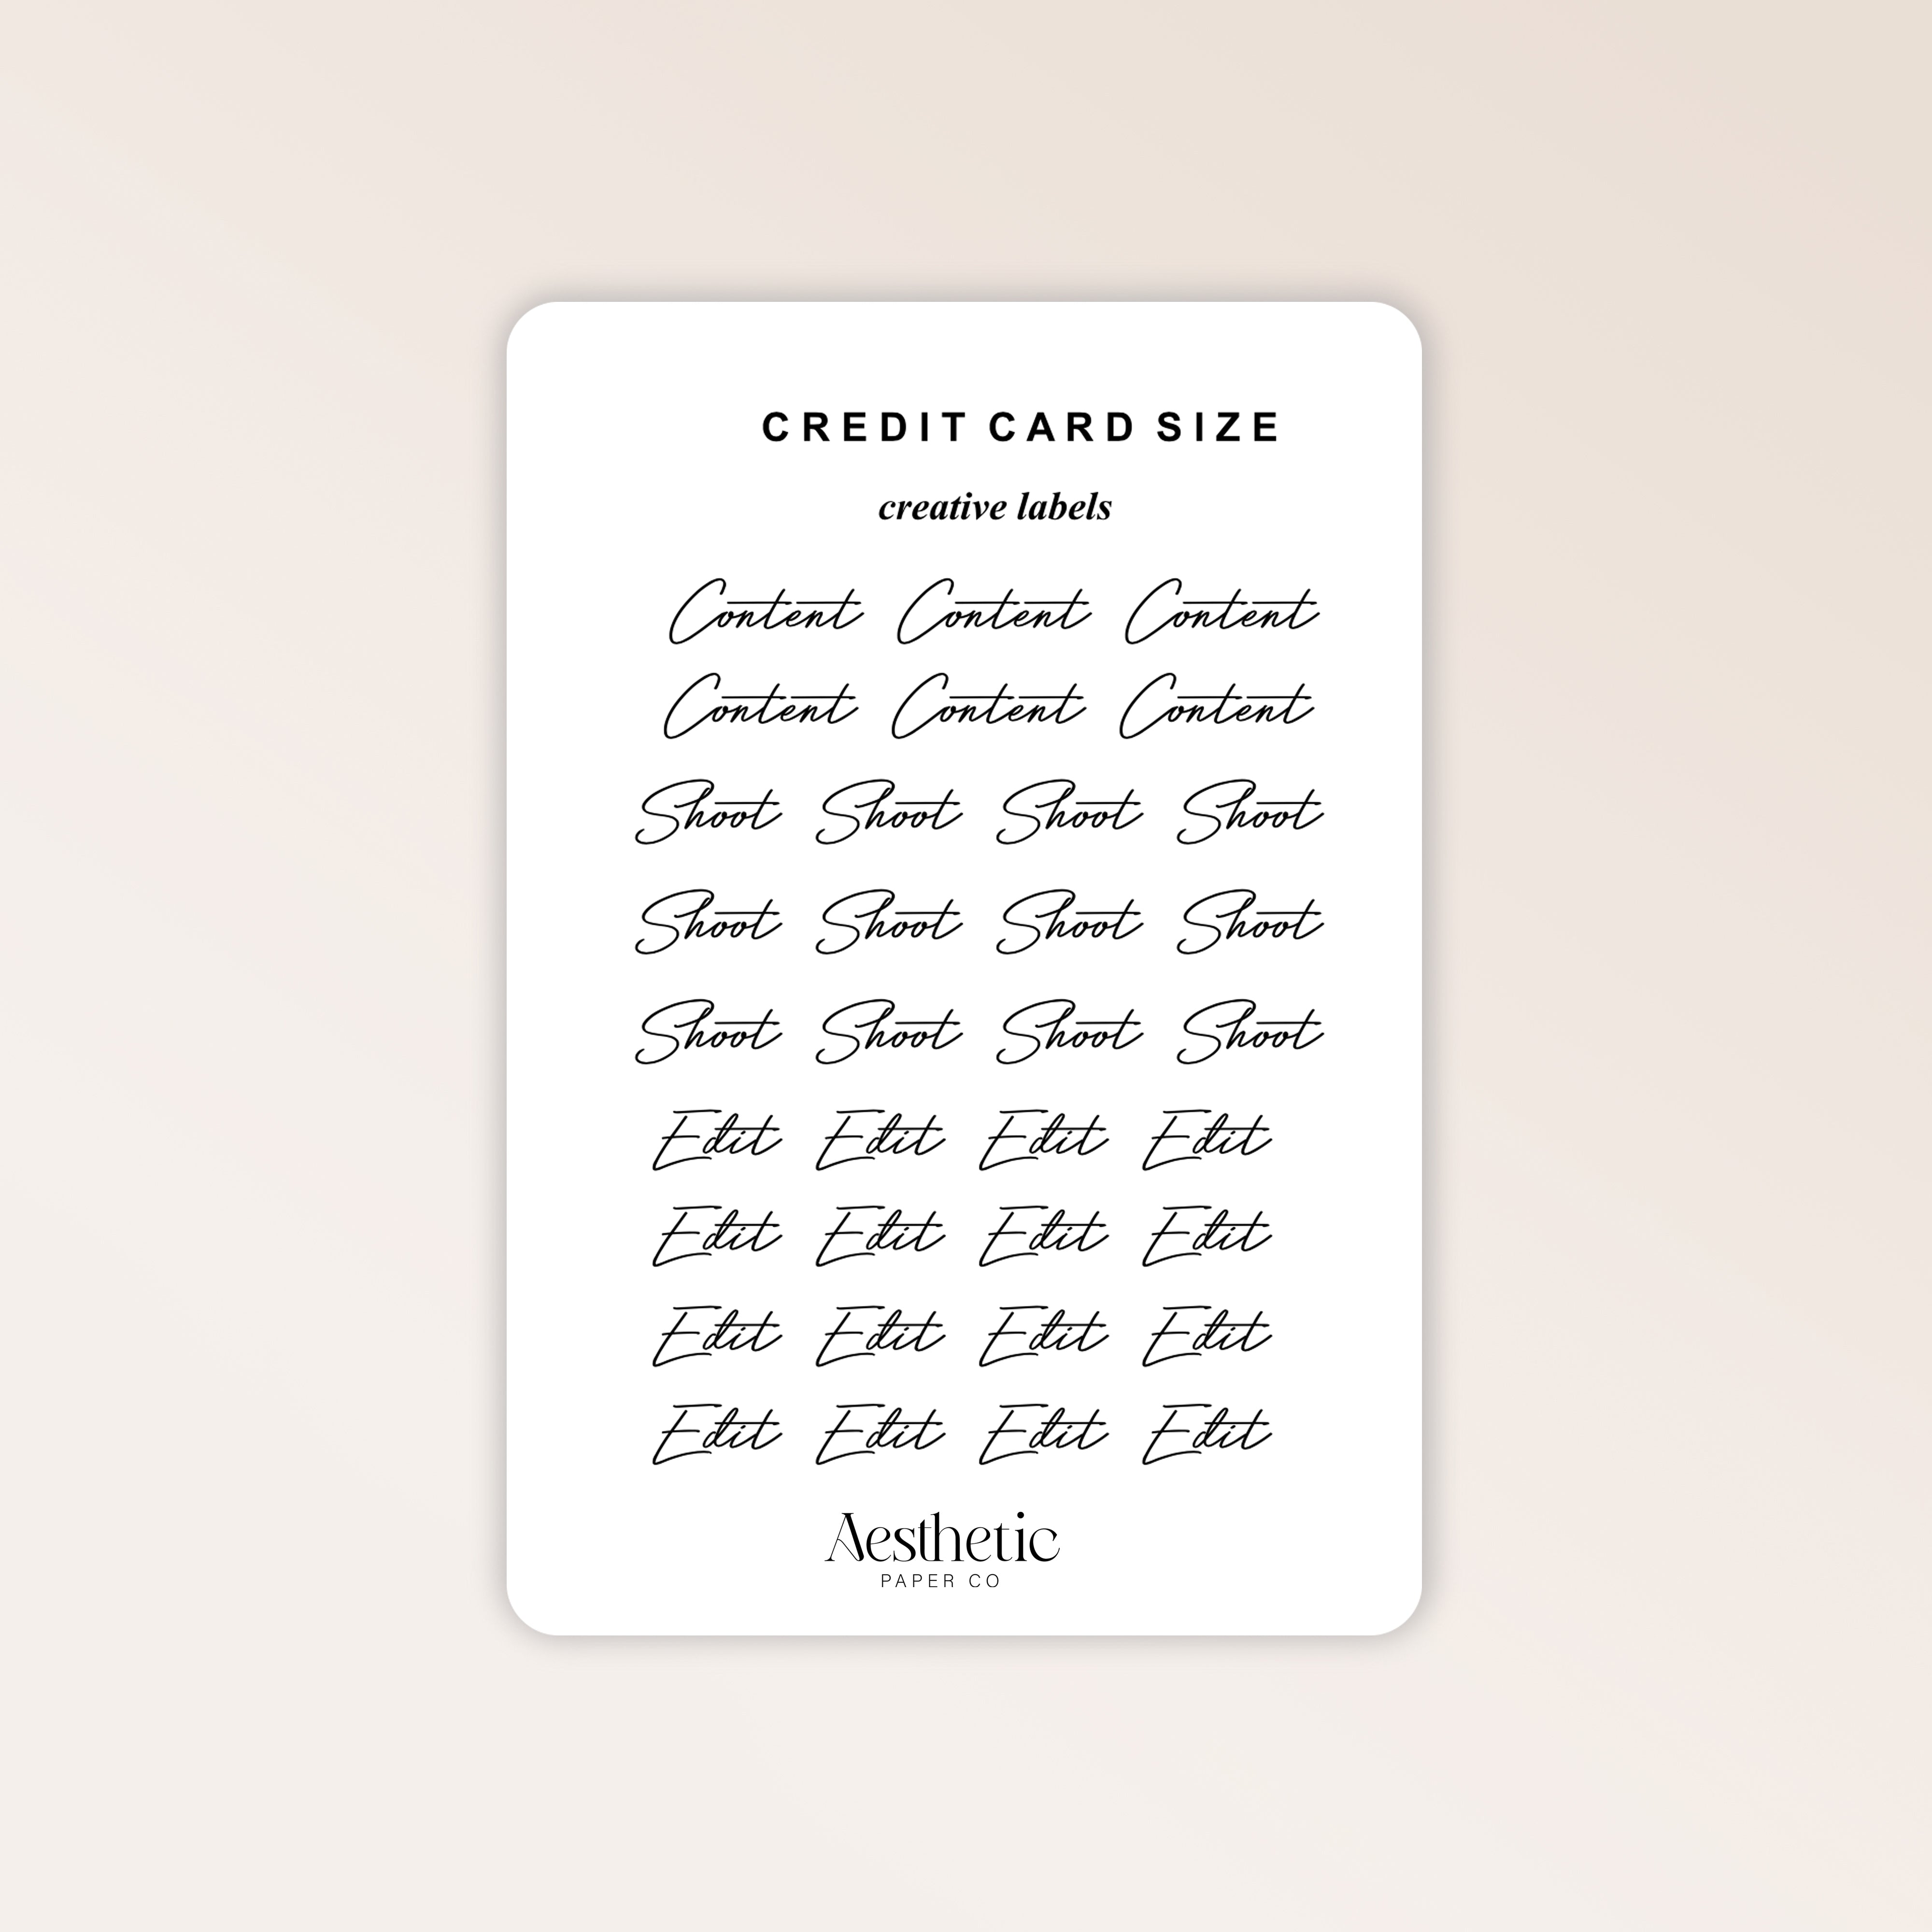 CREDIT CARD SIZED | CREATIVE STICKERS | MINI